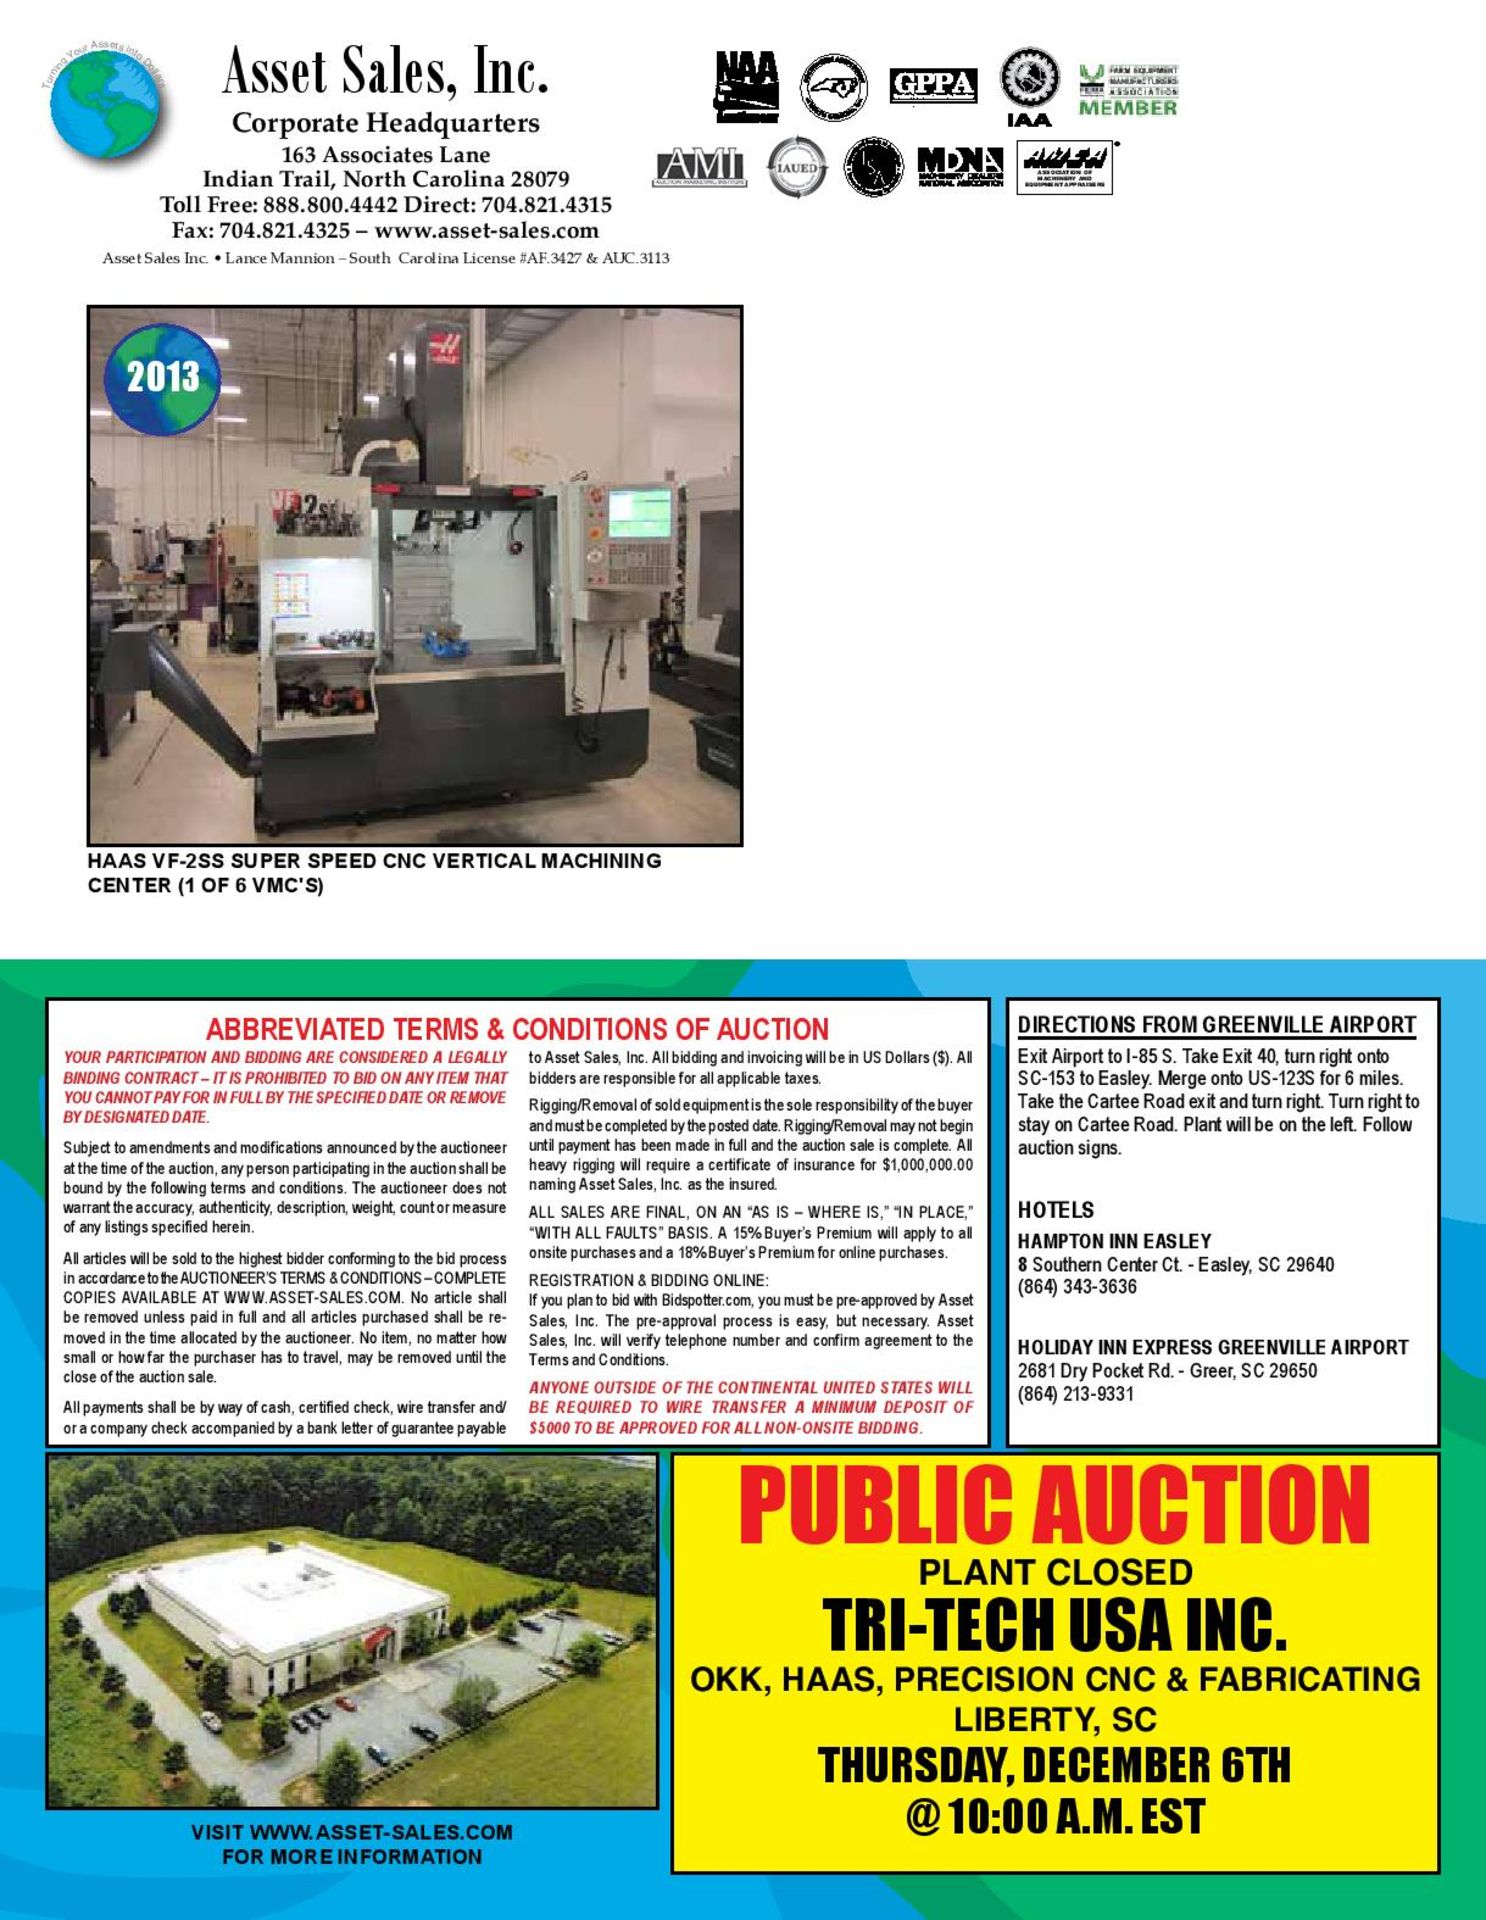 Register Now! TRI-TECH USA INC. - OKK, HAAS, Precision CNC & Fabricating Facility - Image 8 of 8